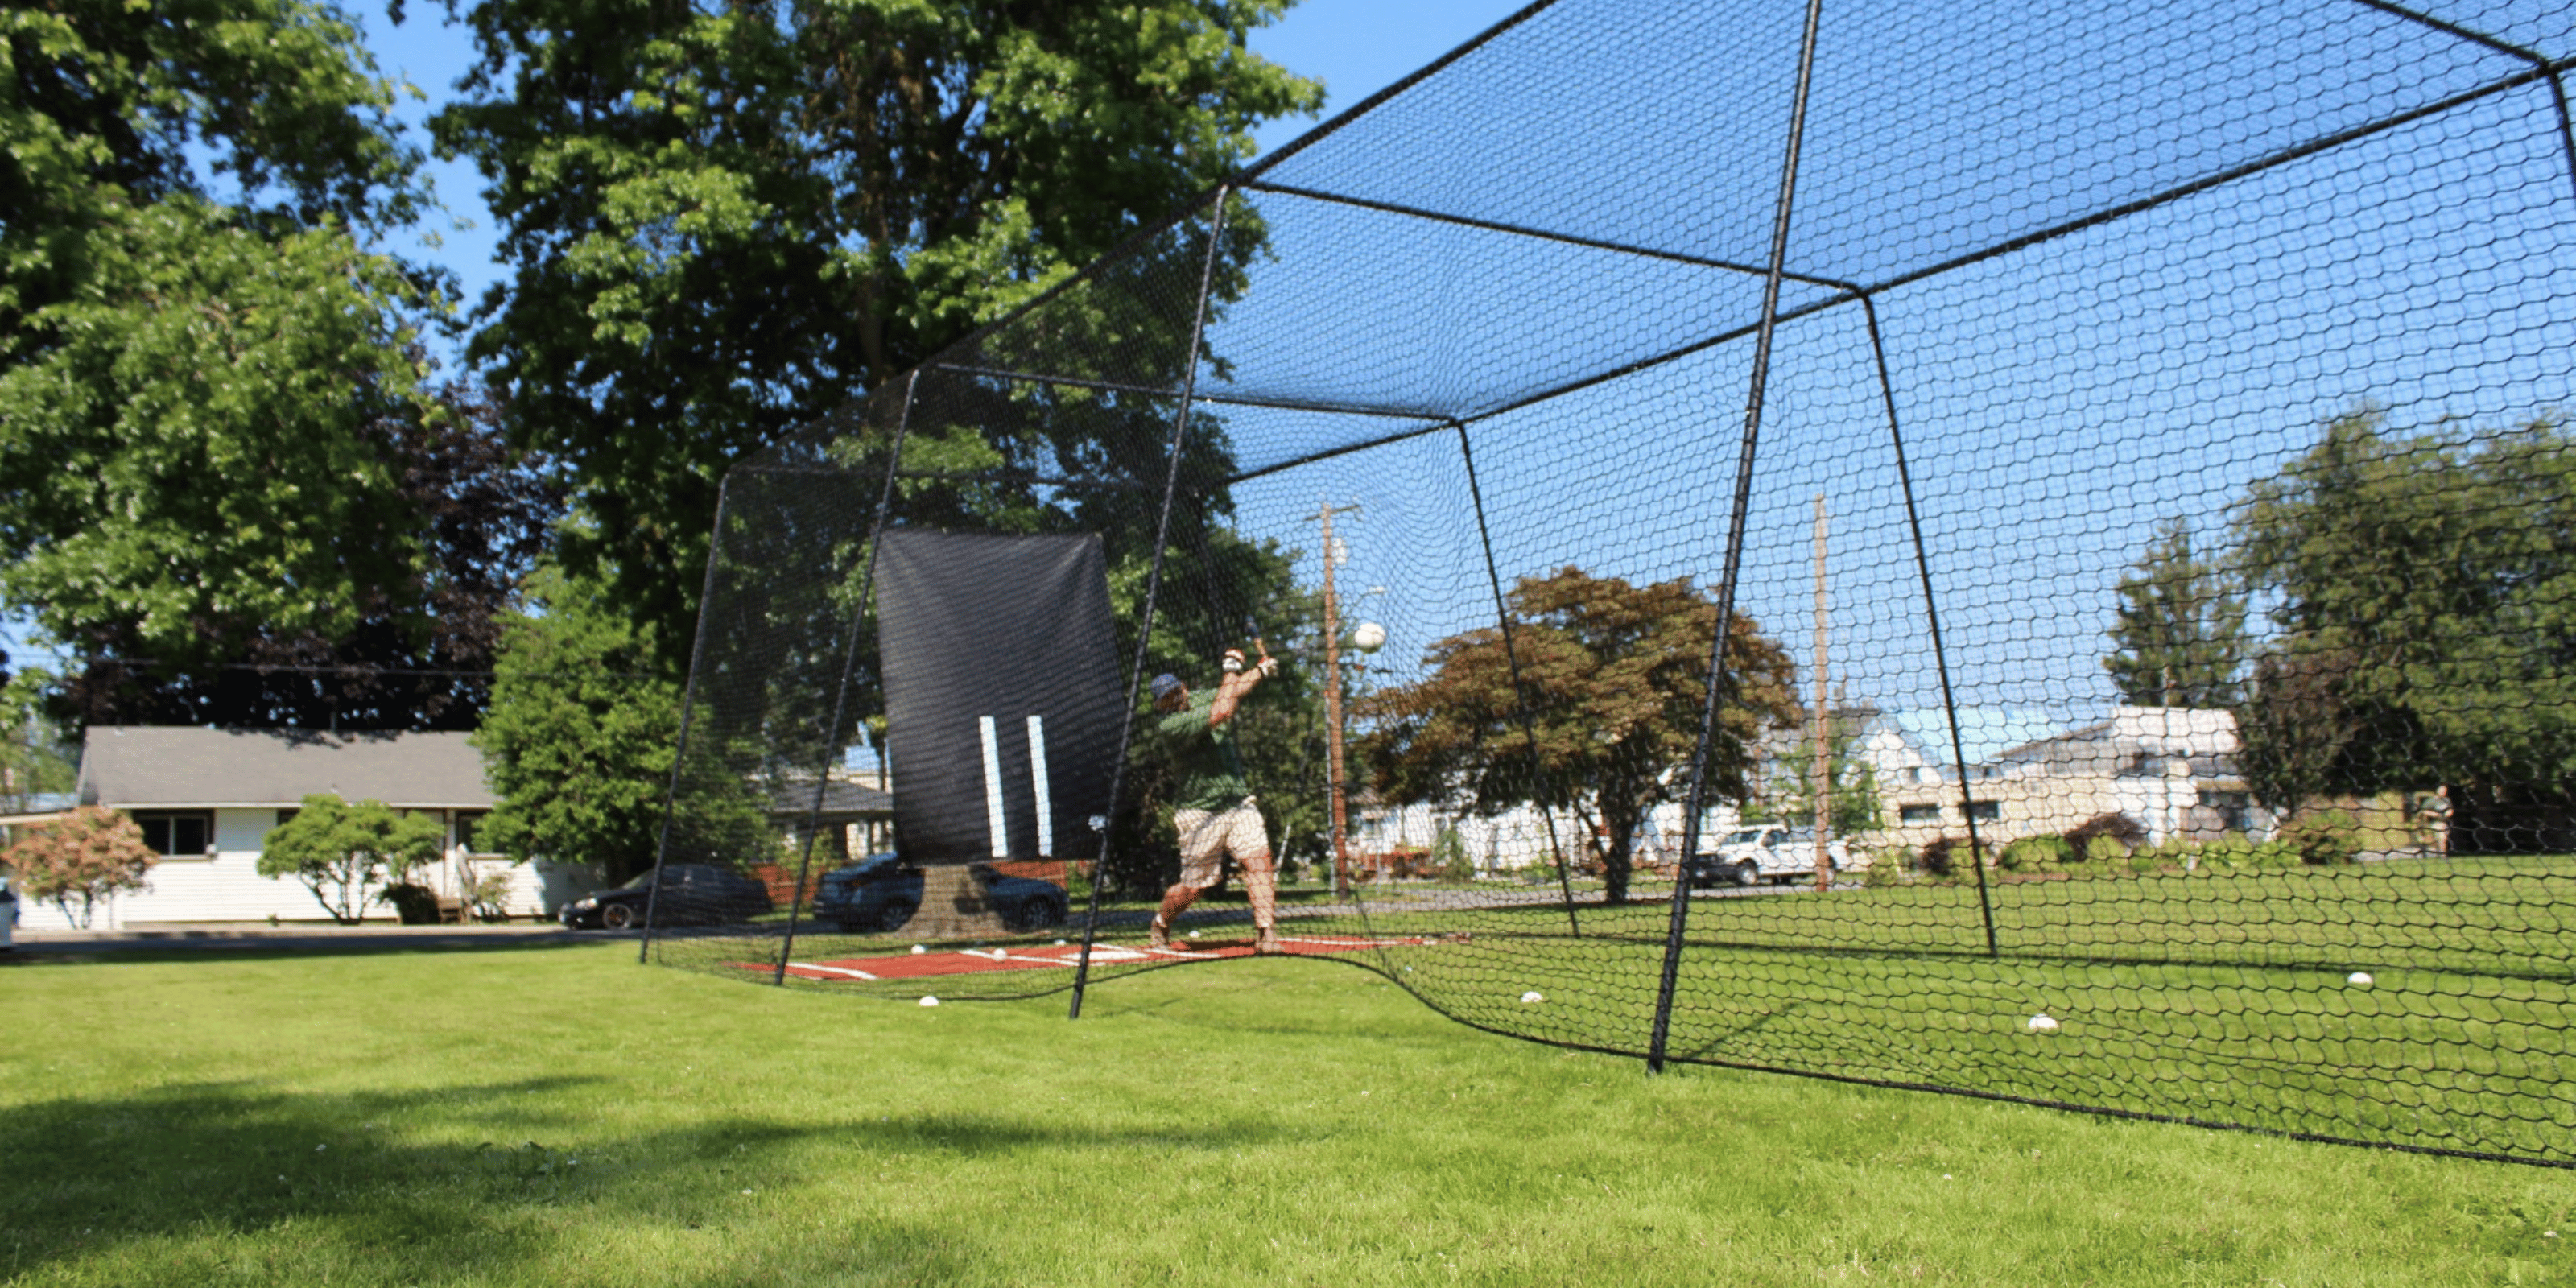 Man batting inside trapezoid batting cage